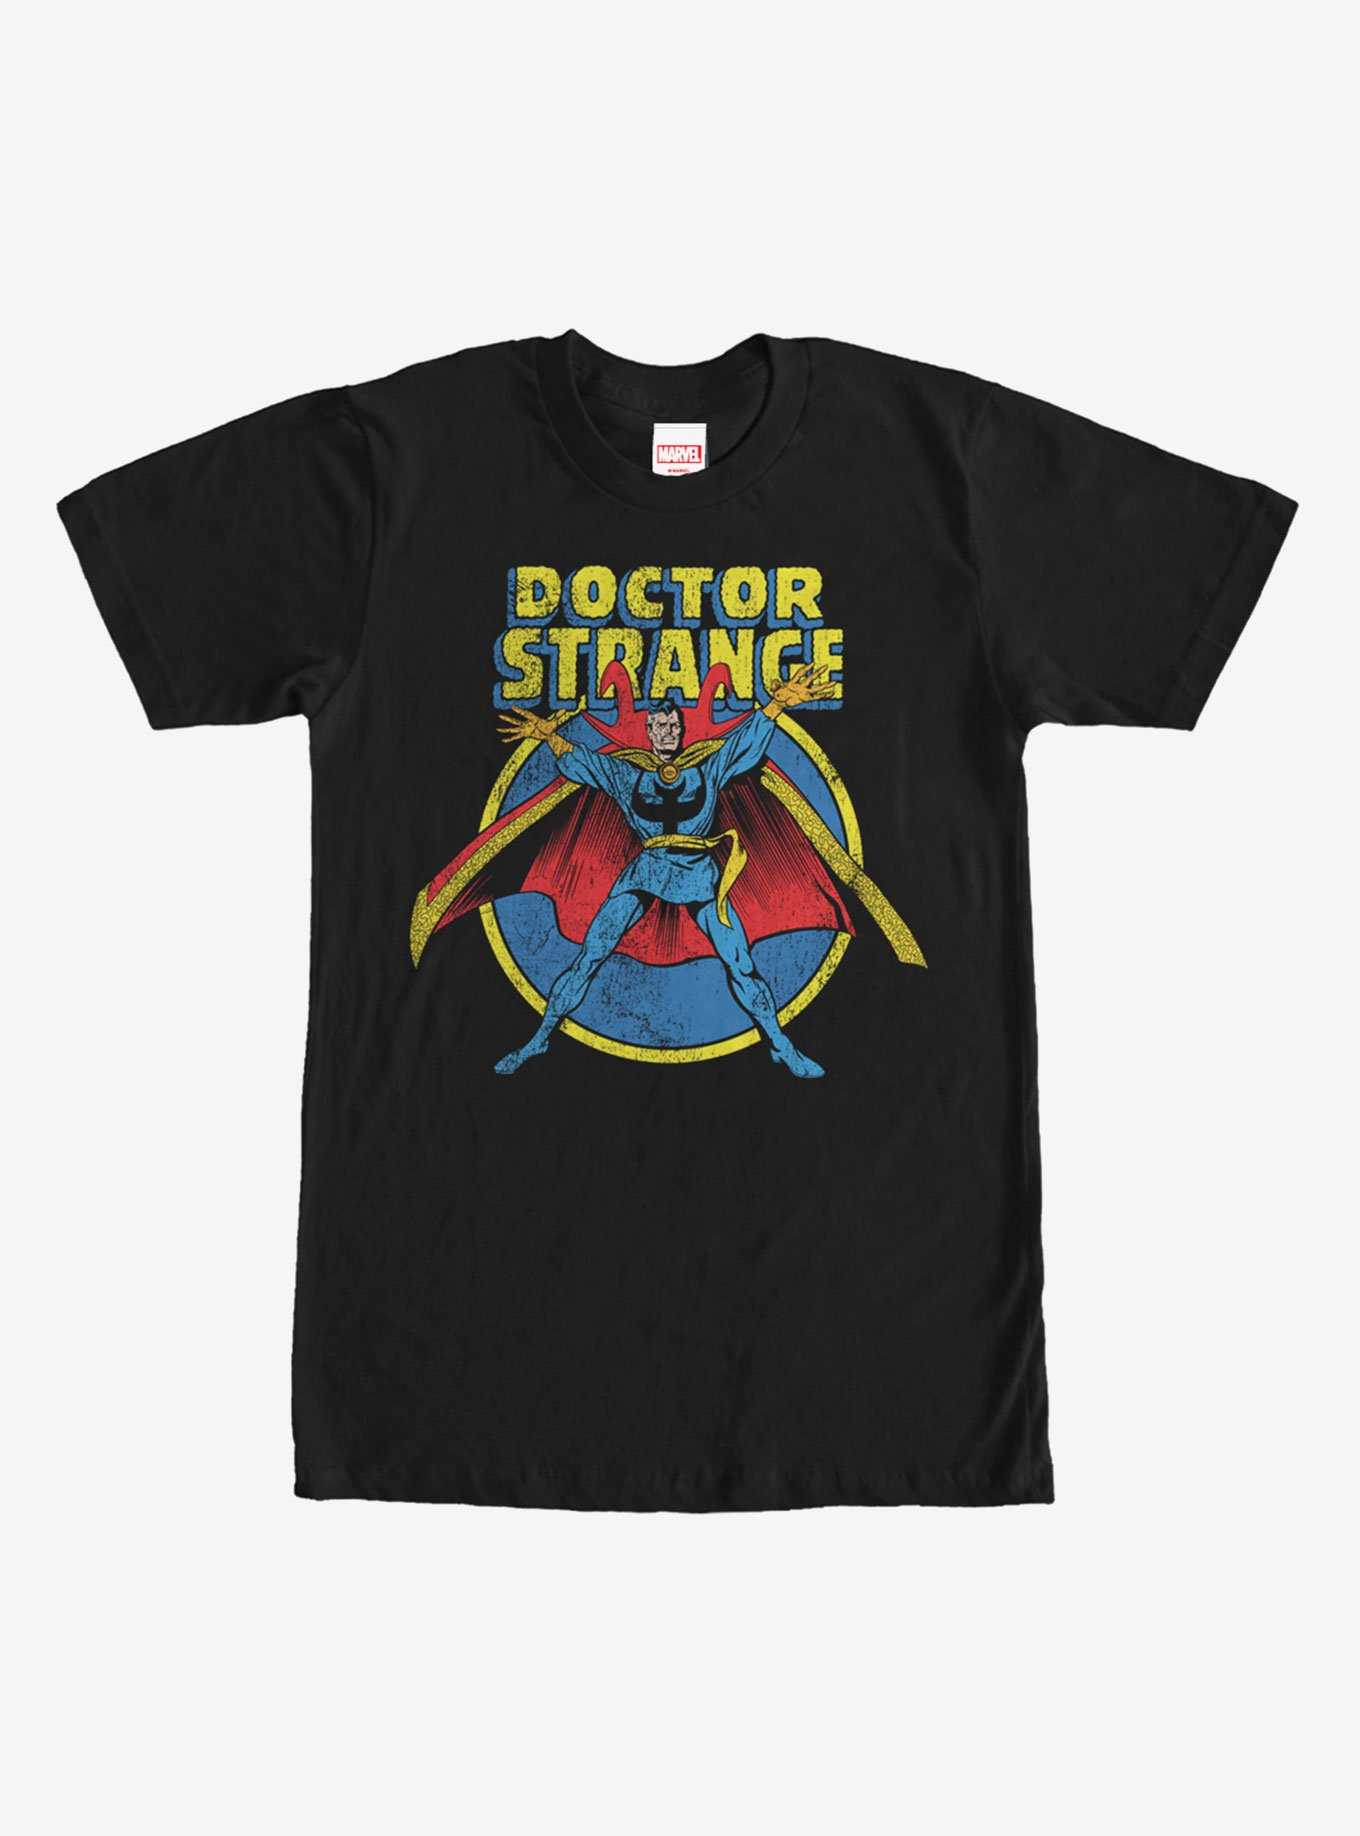 Marvel Doctor Strange The Sorcerer Supreme - Long Sleeve T-Shirt for Men -  Customized-Black 